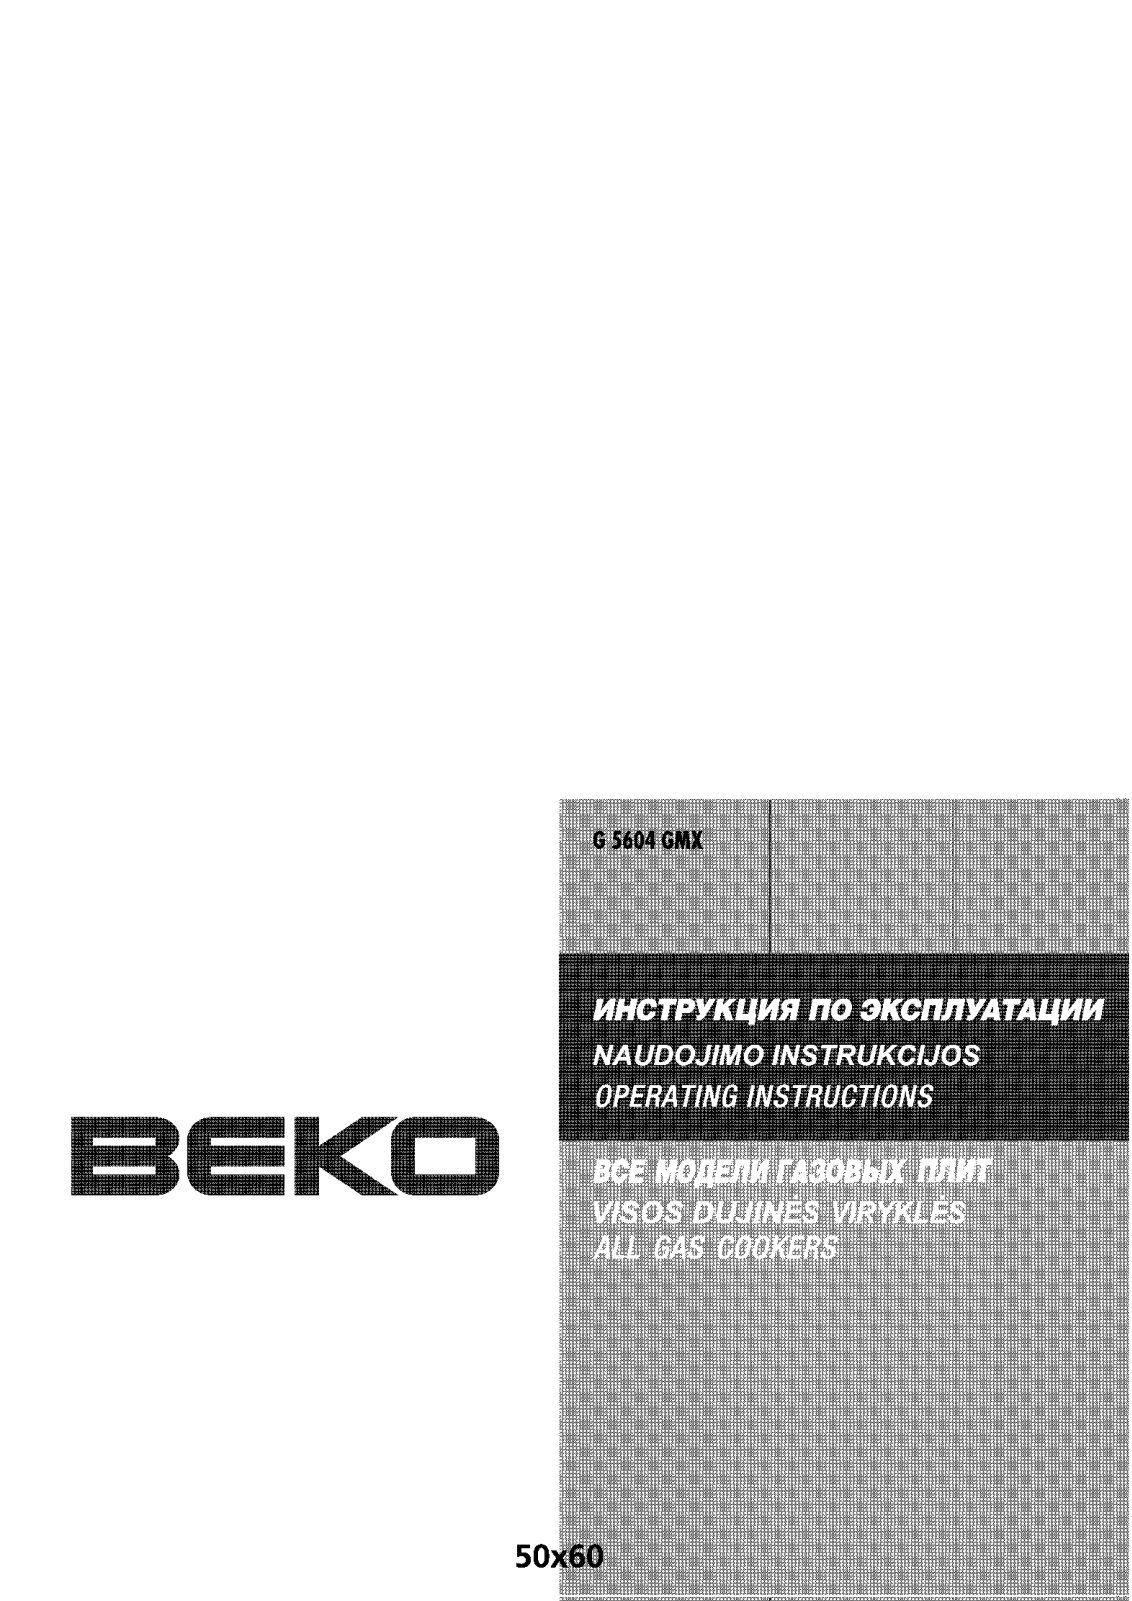 Beko G S6045 GMX User Manual